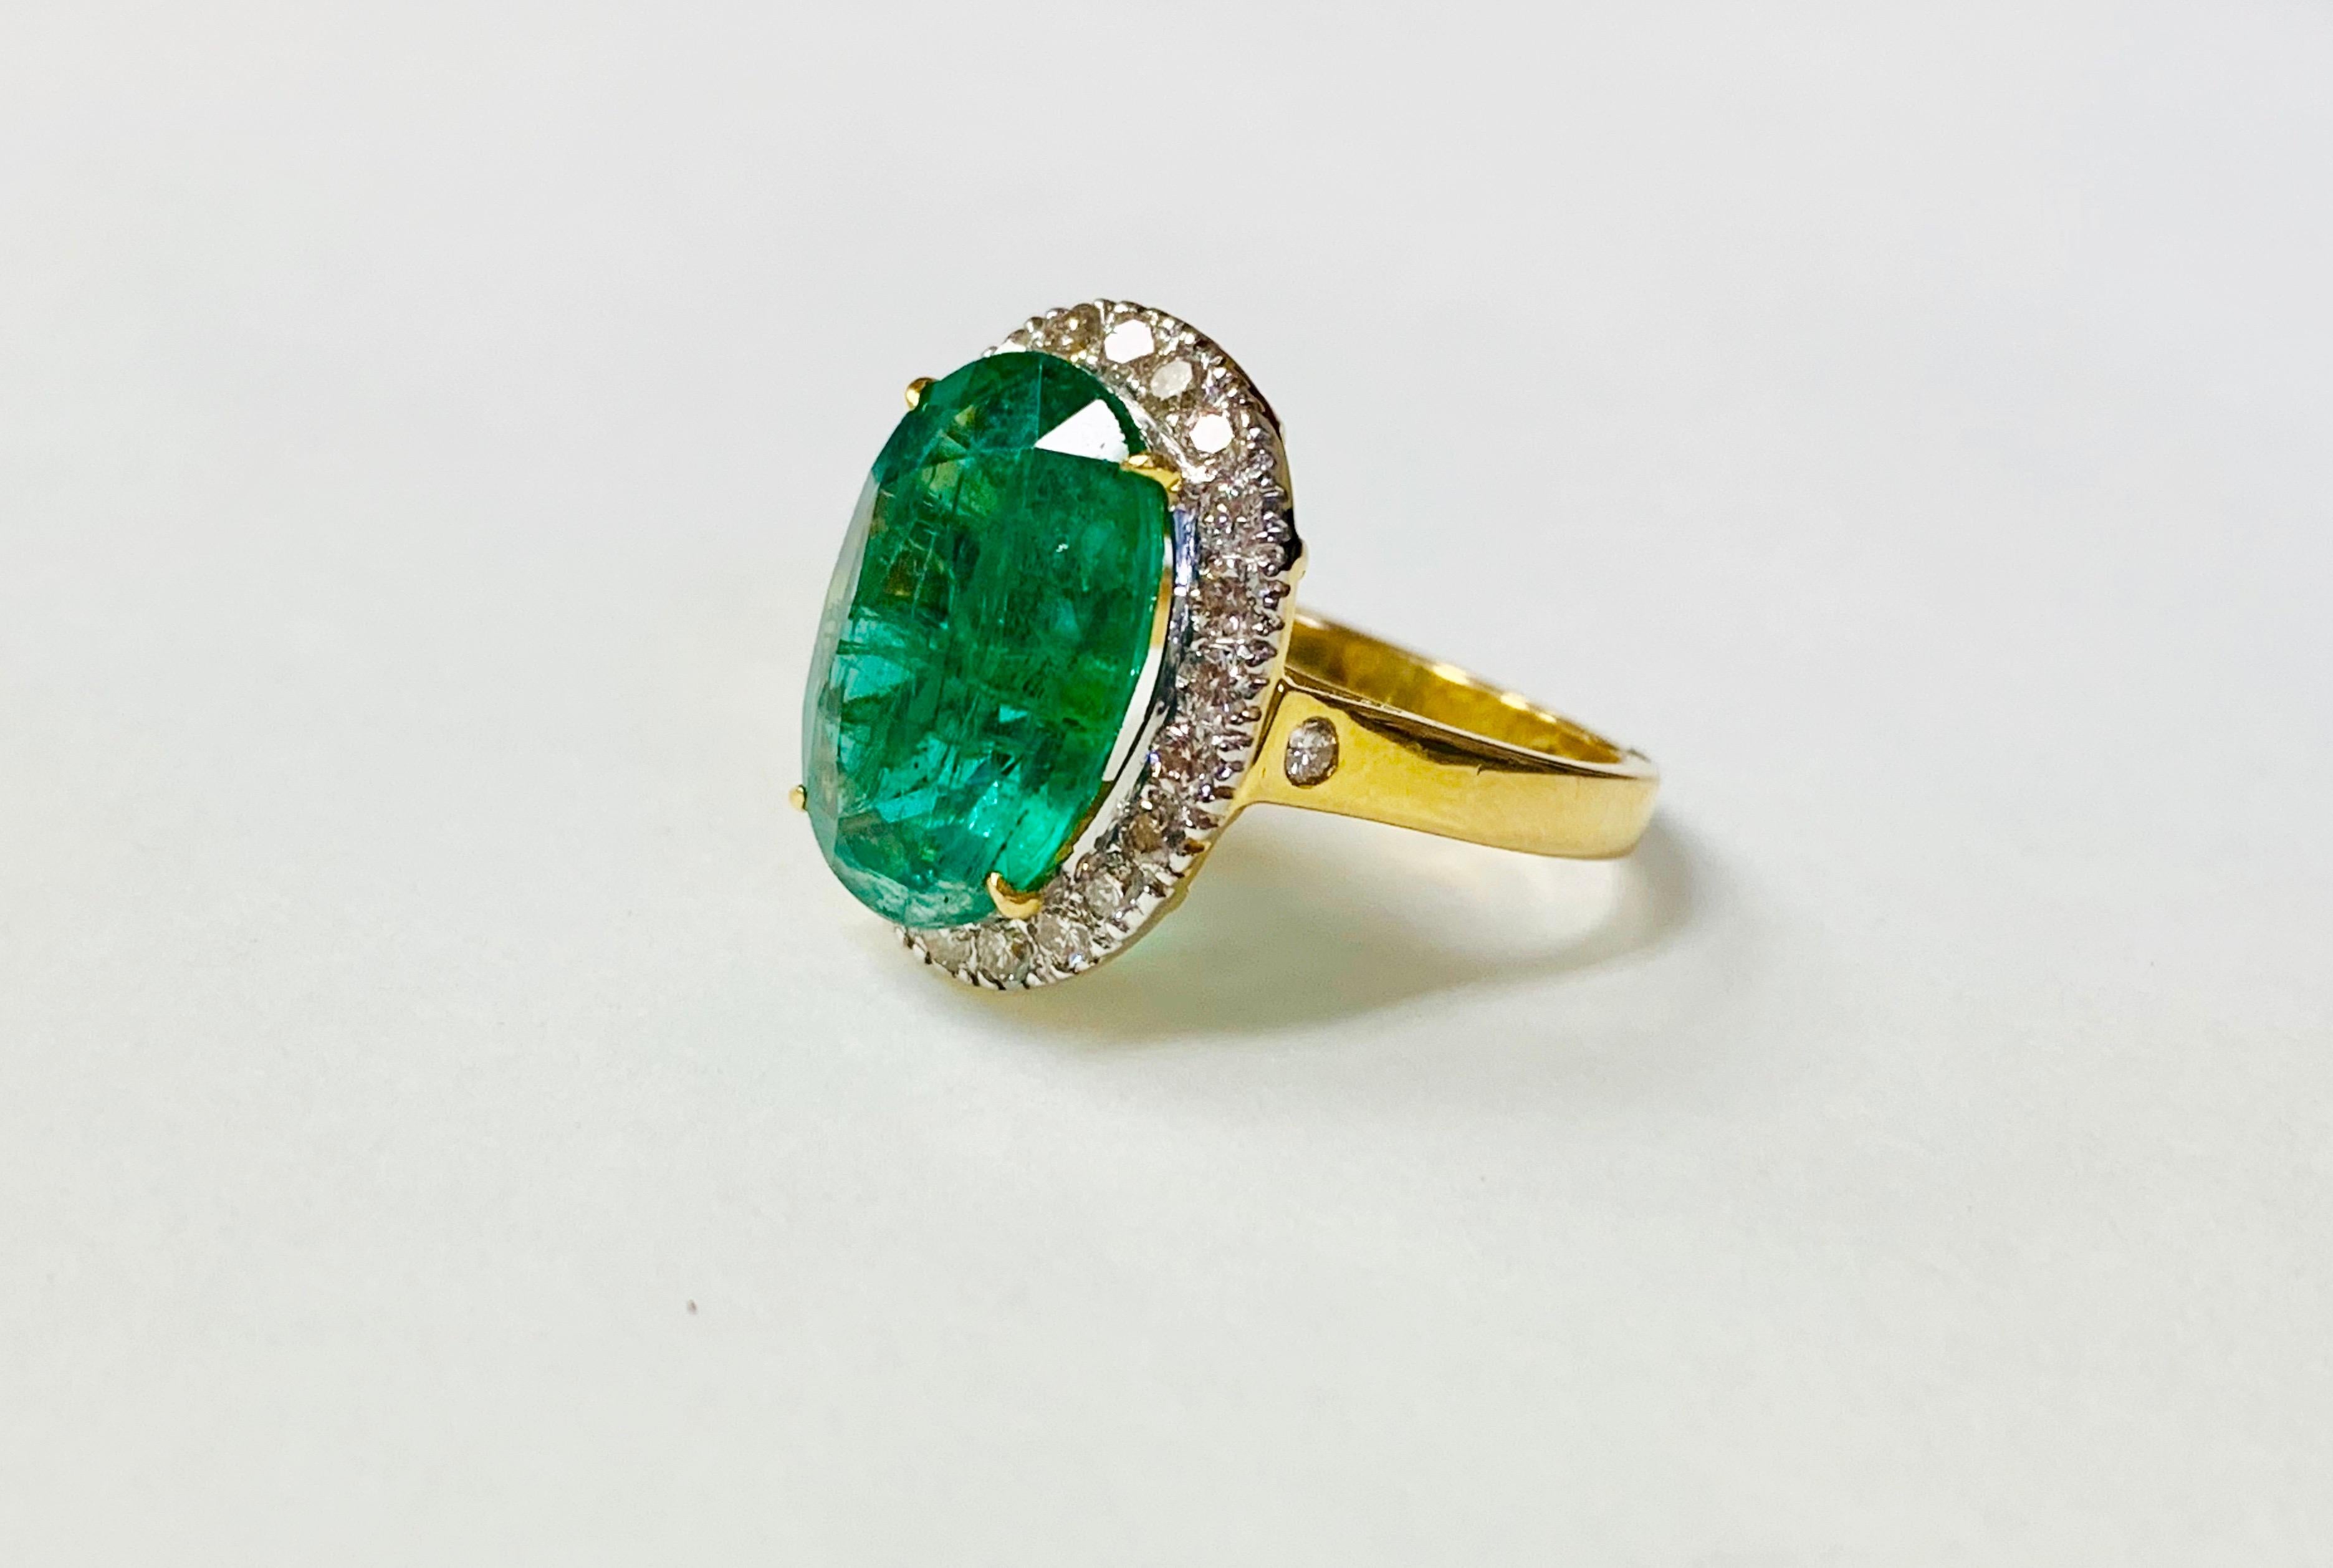 Oval Cut Emerald and Diamond Ring in 18 Karat Yellow Gold